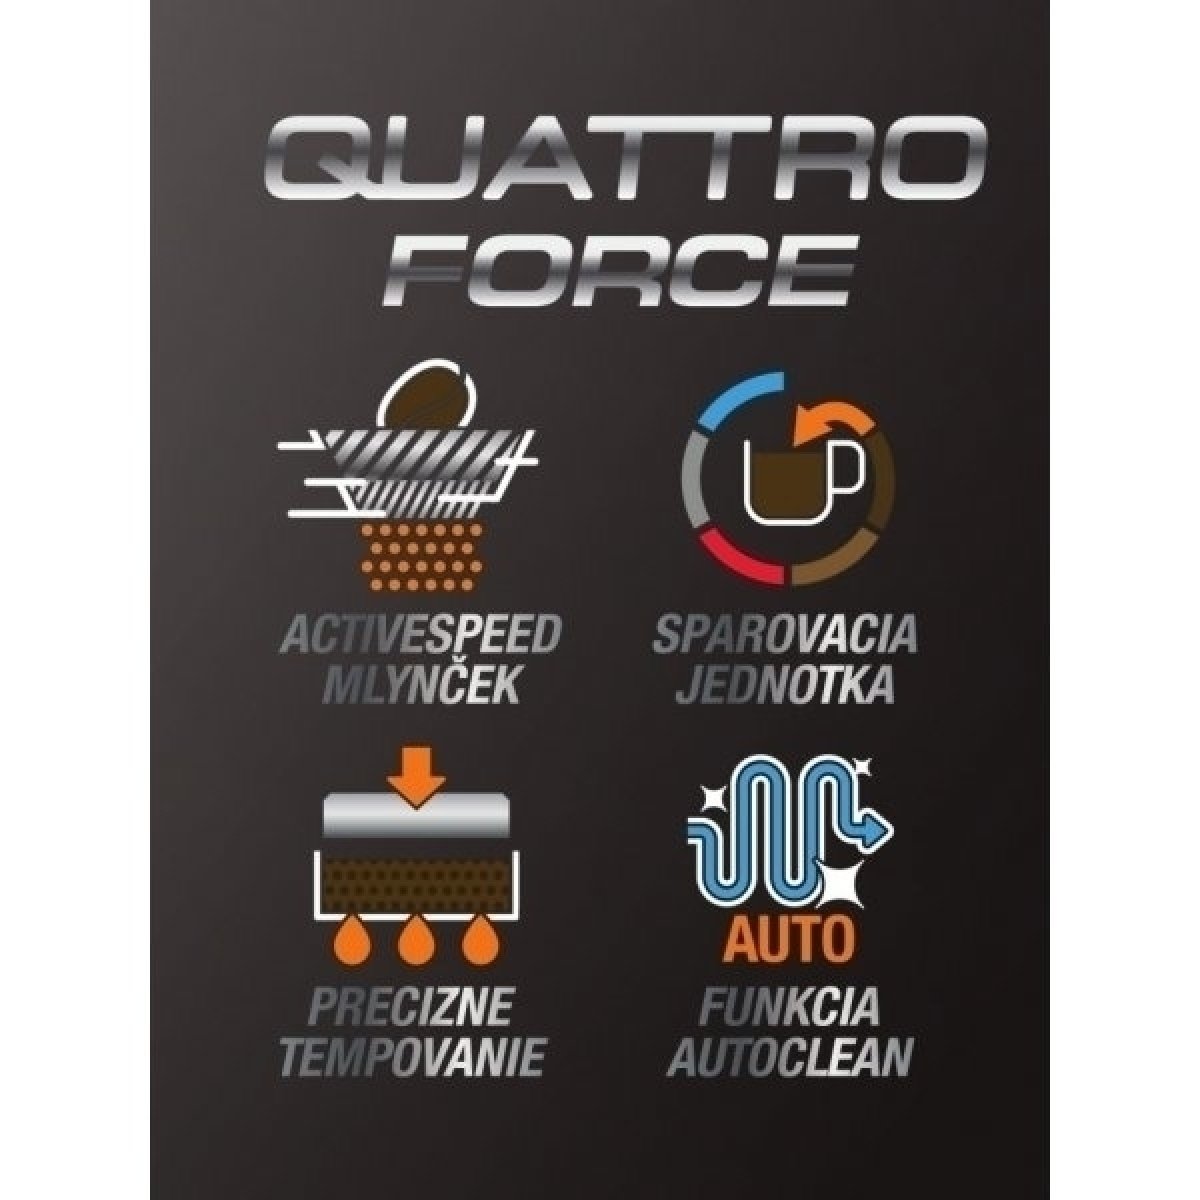 Technológia Krups Quattro Force